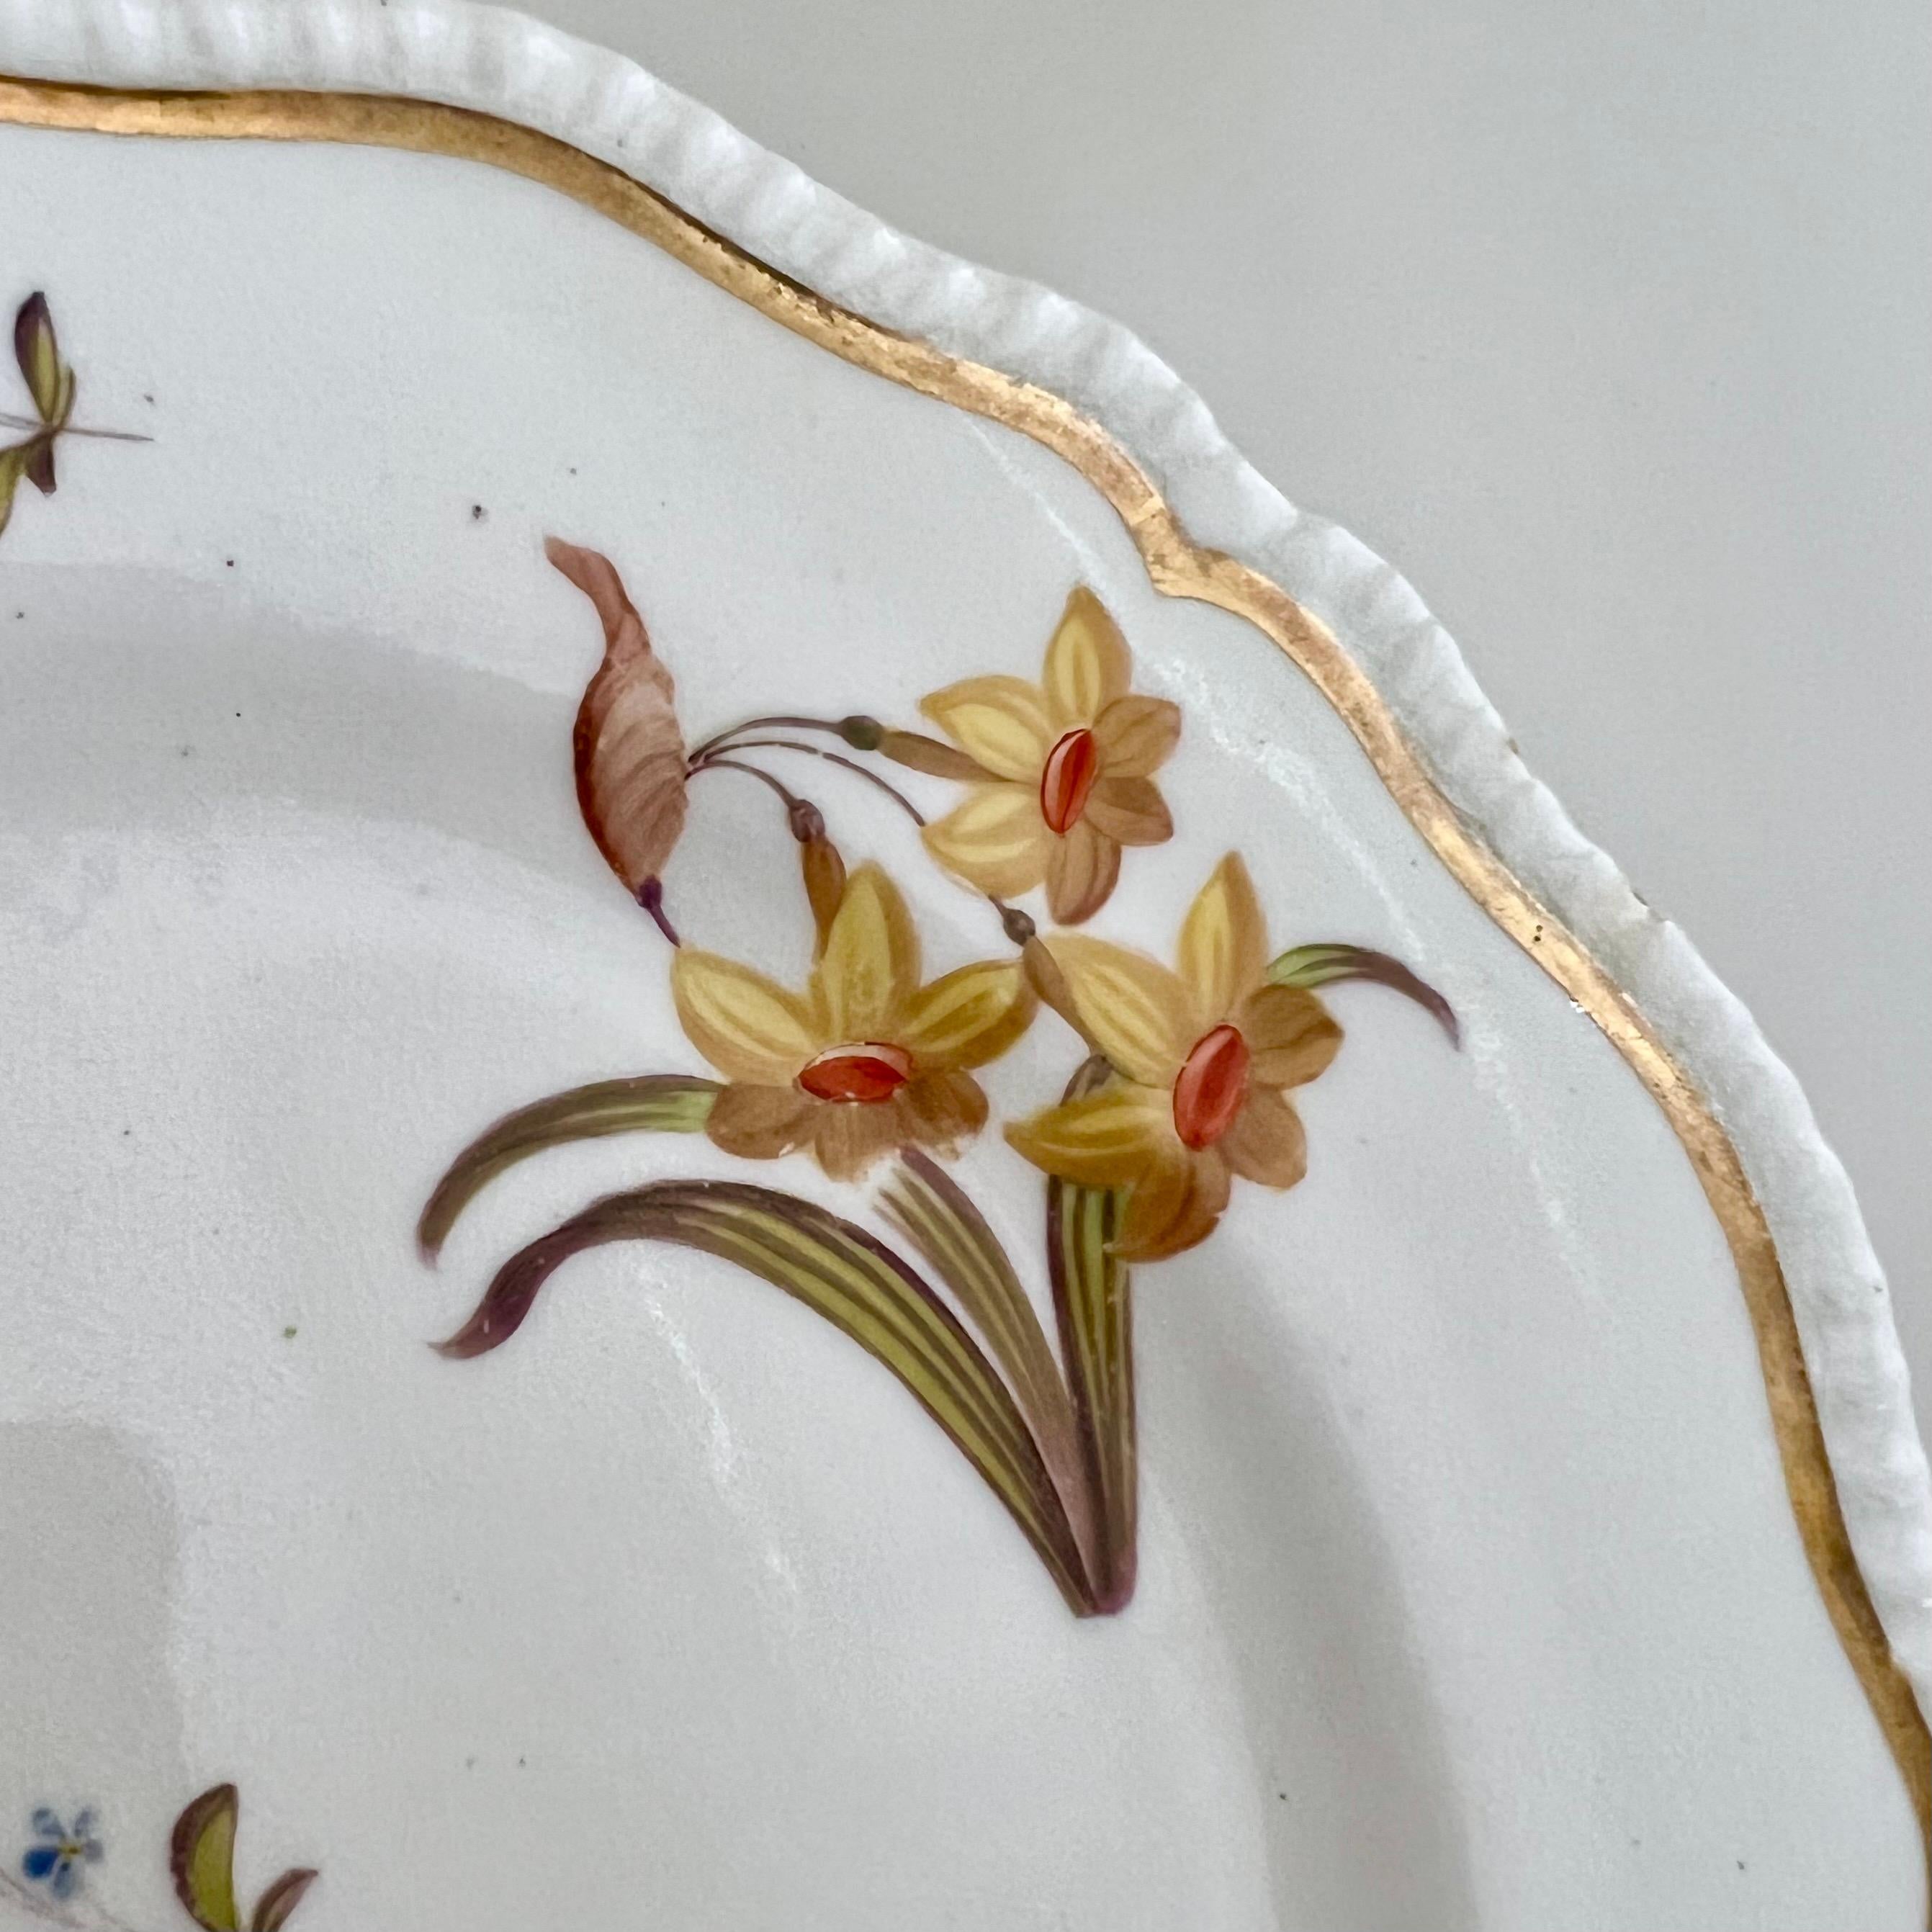 Early 19th Century H&R Daniel Porcelain Plate, White, Floral Patt. 3998 Gadrooned, Regency Ca 1824